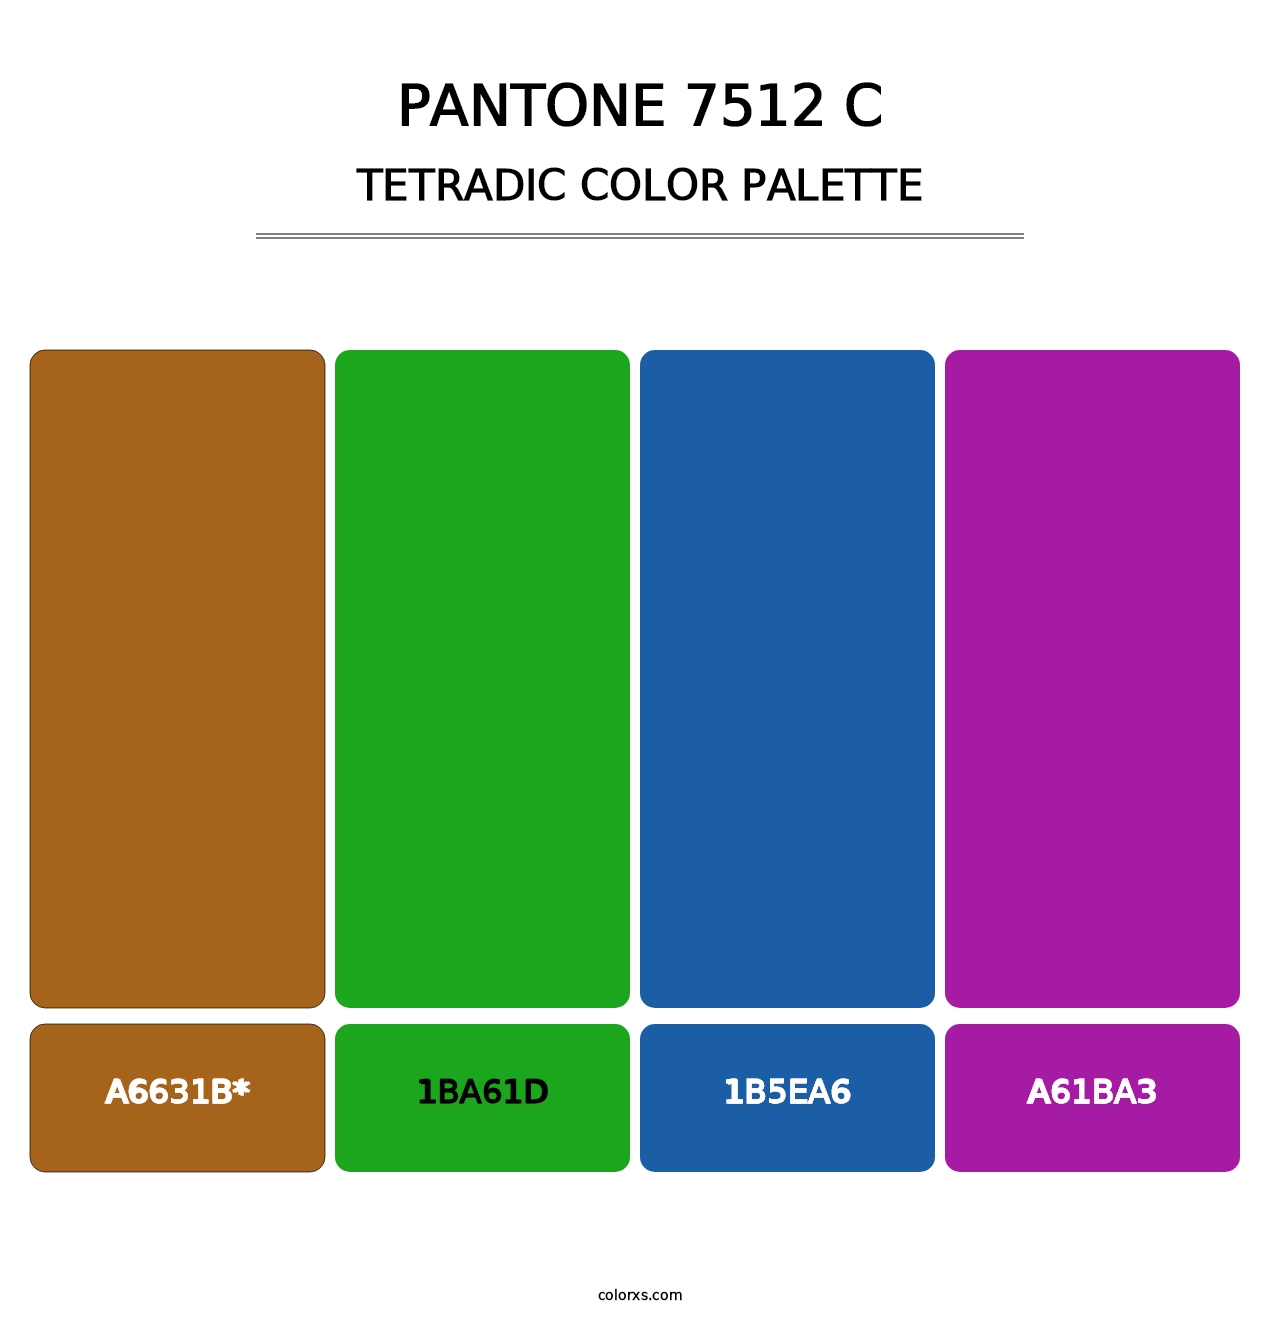 PANTONE 7512 C - Tetradic Color Palette